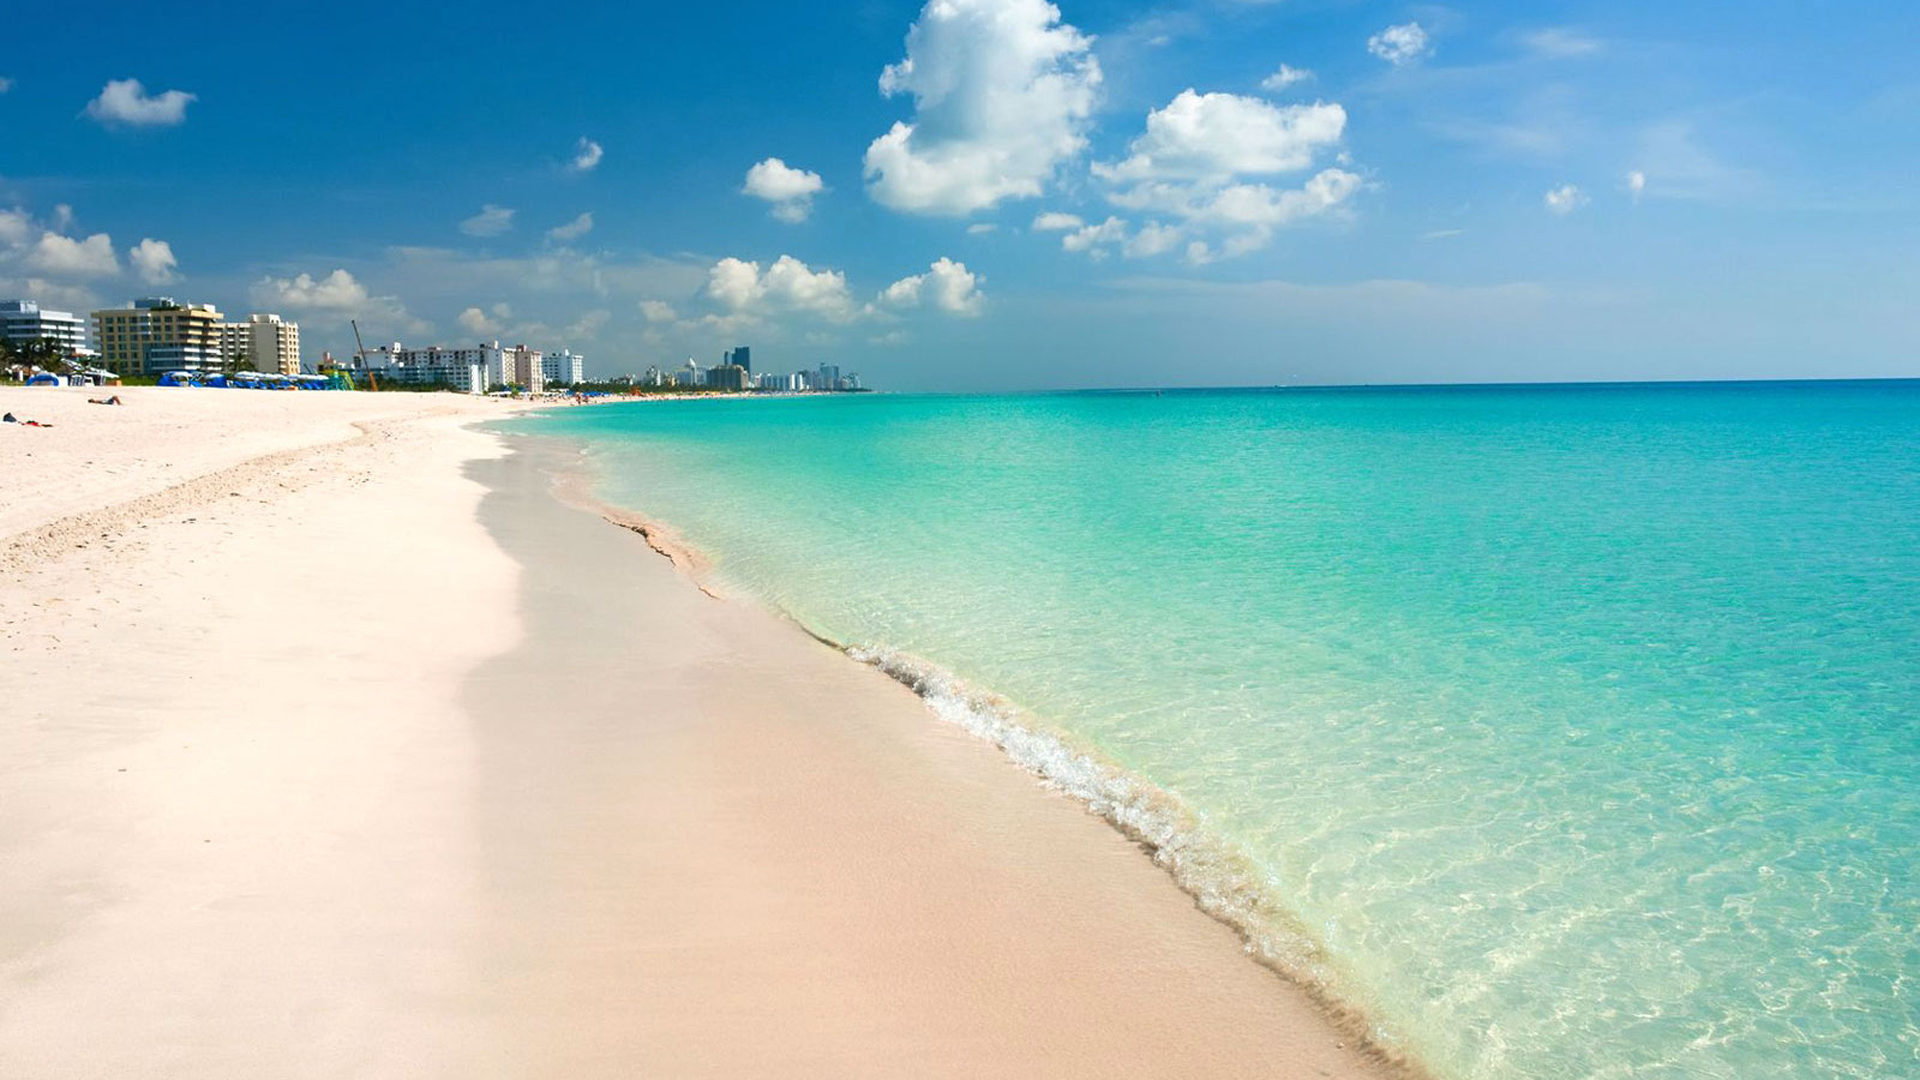 Florida: South Beach, Neighborhood in Miami Beach, Known for its glamorous scene. 1920x1080 Full HD Wallpaper.